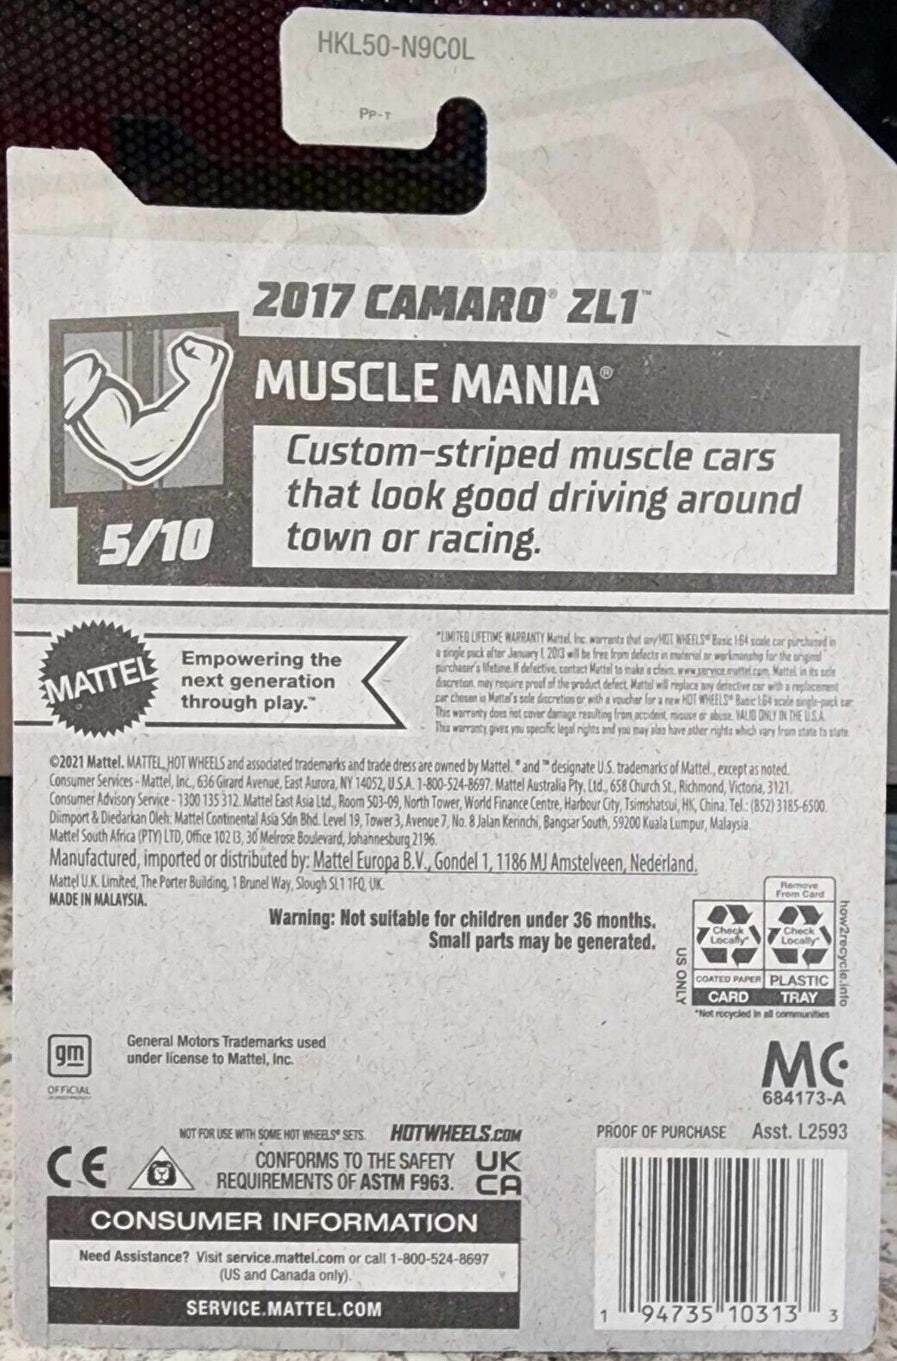 Hot Wheels 2017 Camaro ZL1 HW Muscle Mania HKL50 - Kroger Exclusive - Plus (+) a Bonus Hot Wheel